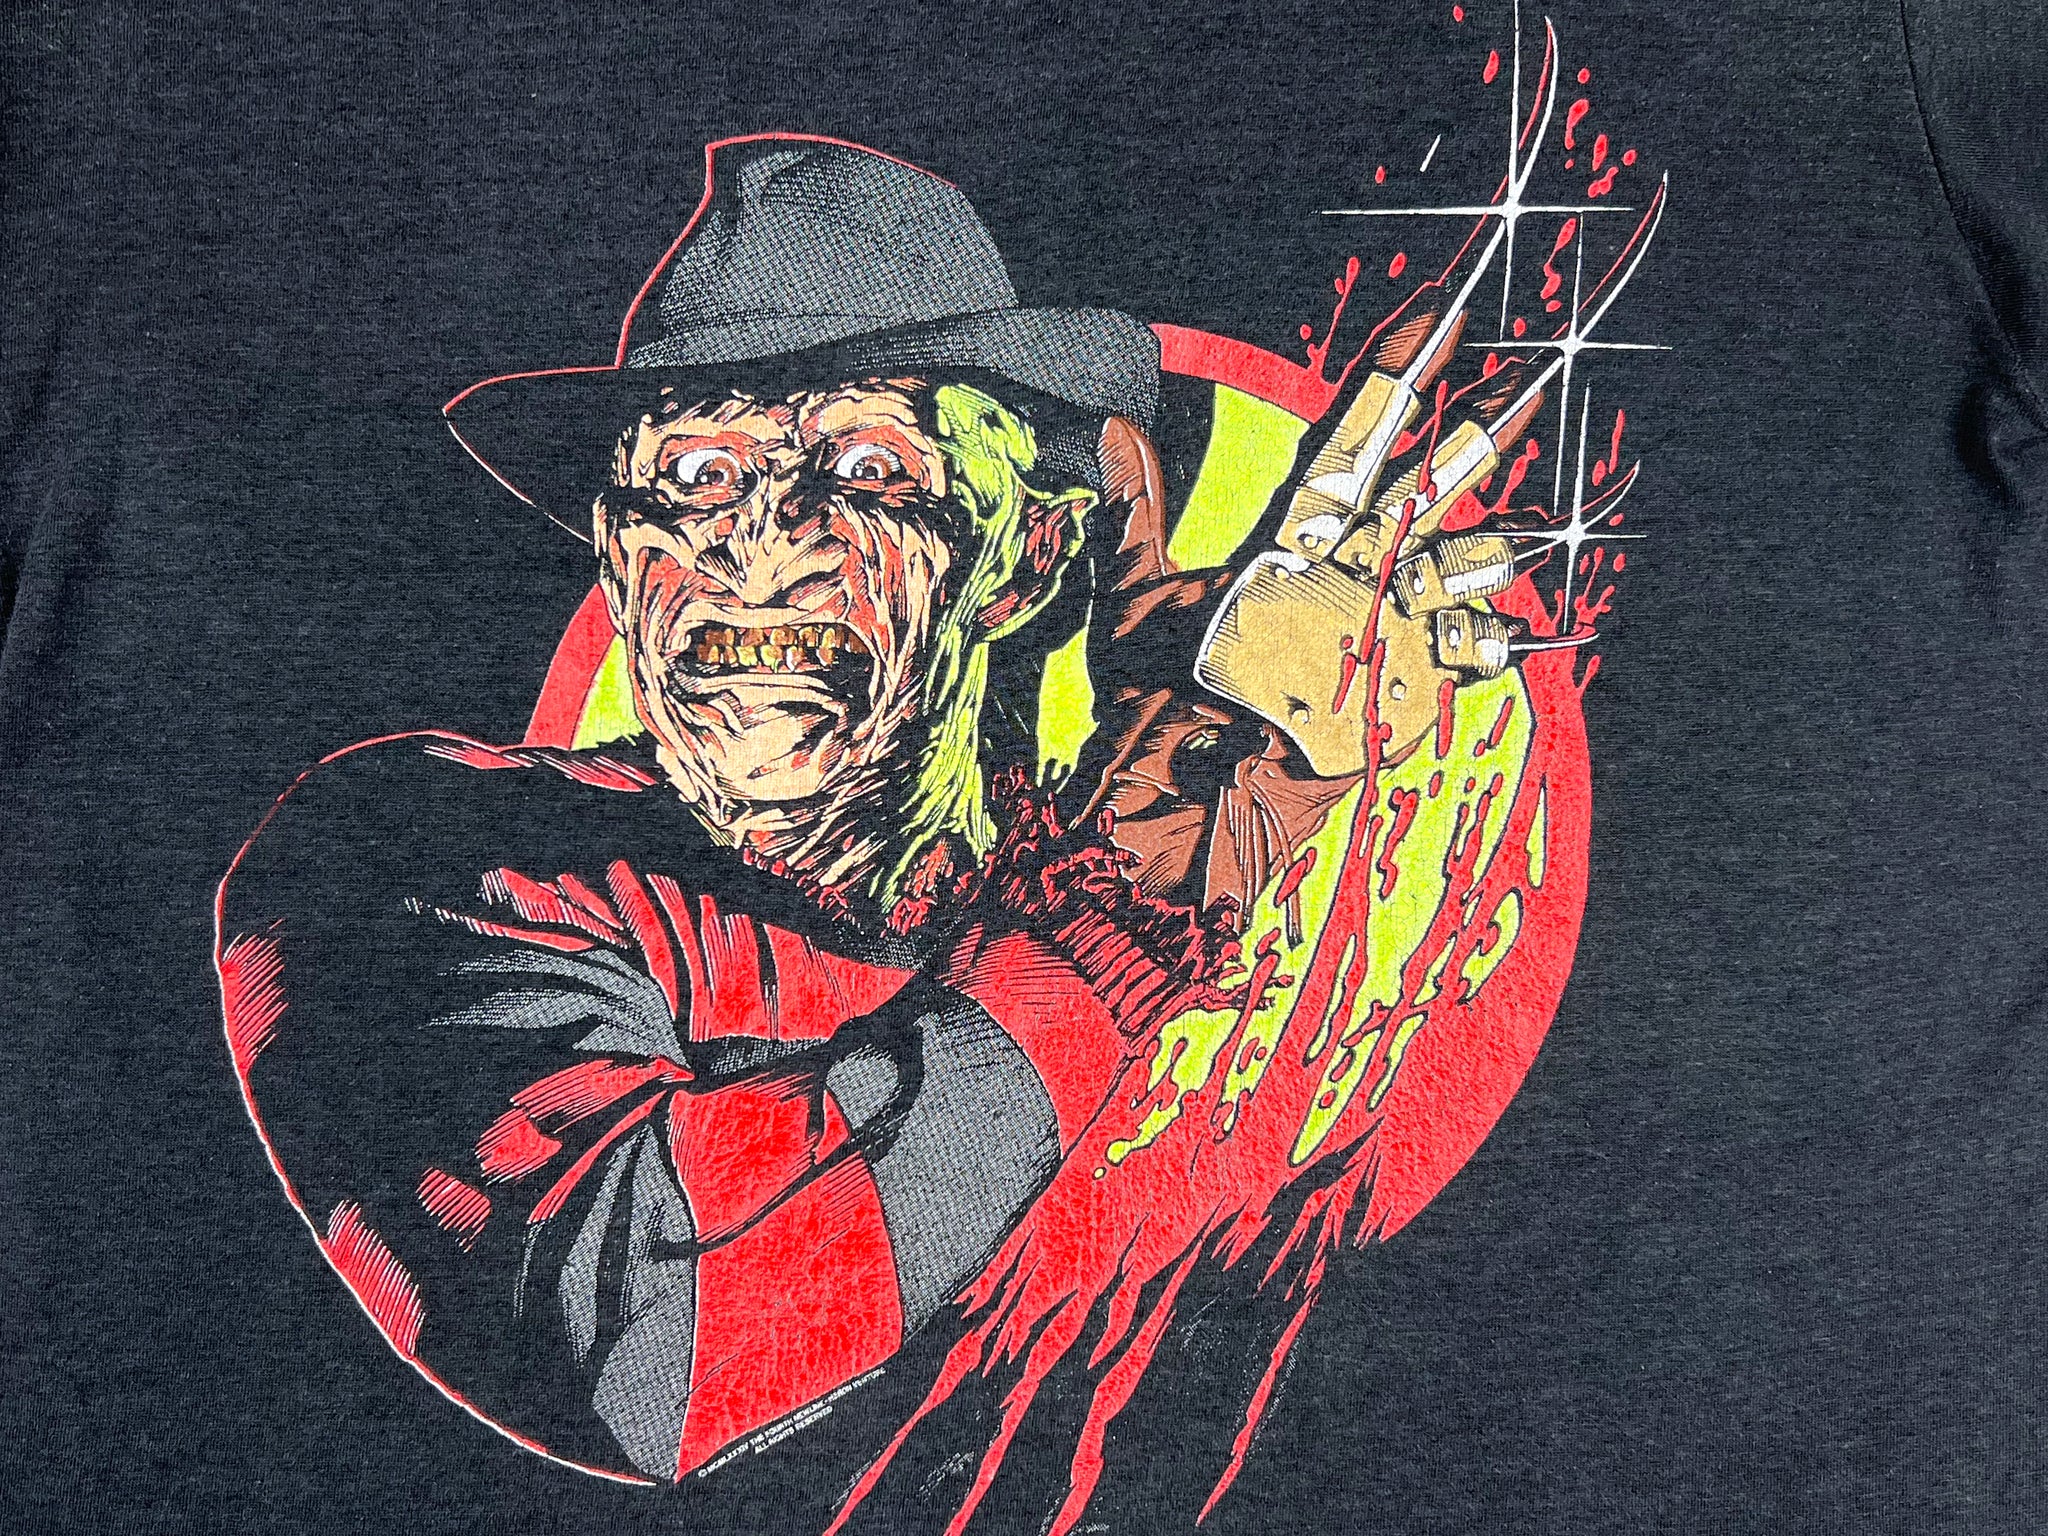 A Nightmare on Elm Street Freddy Krueger T-Shirt